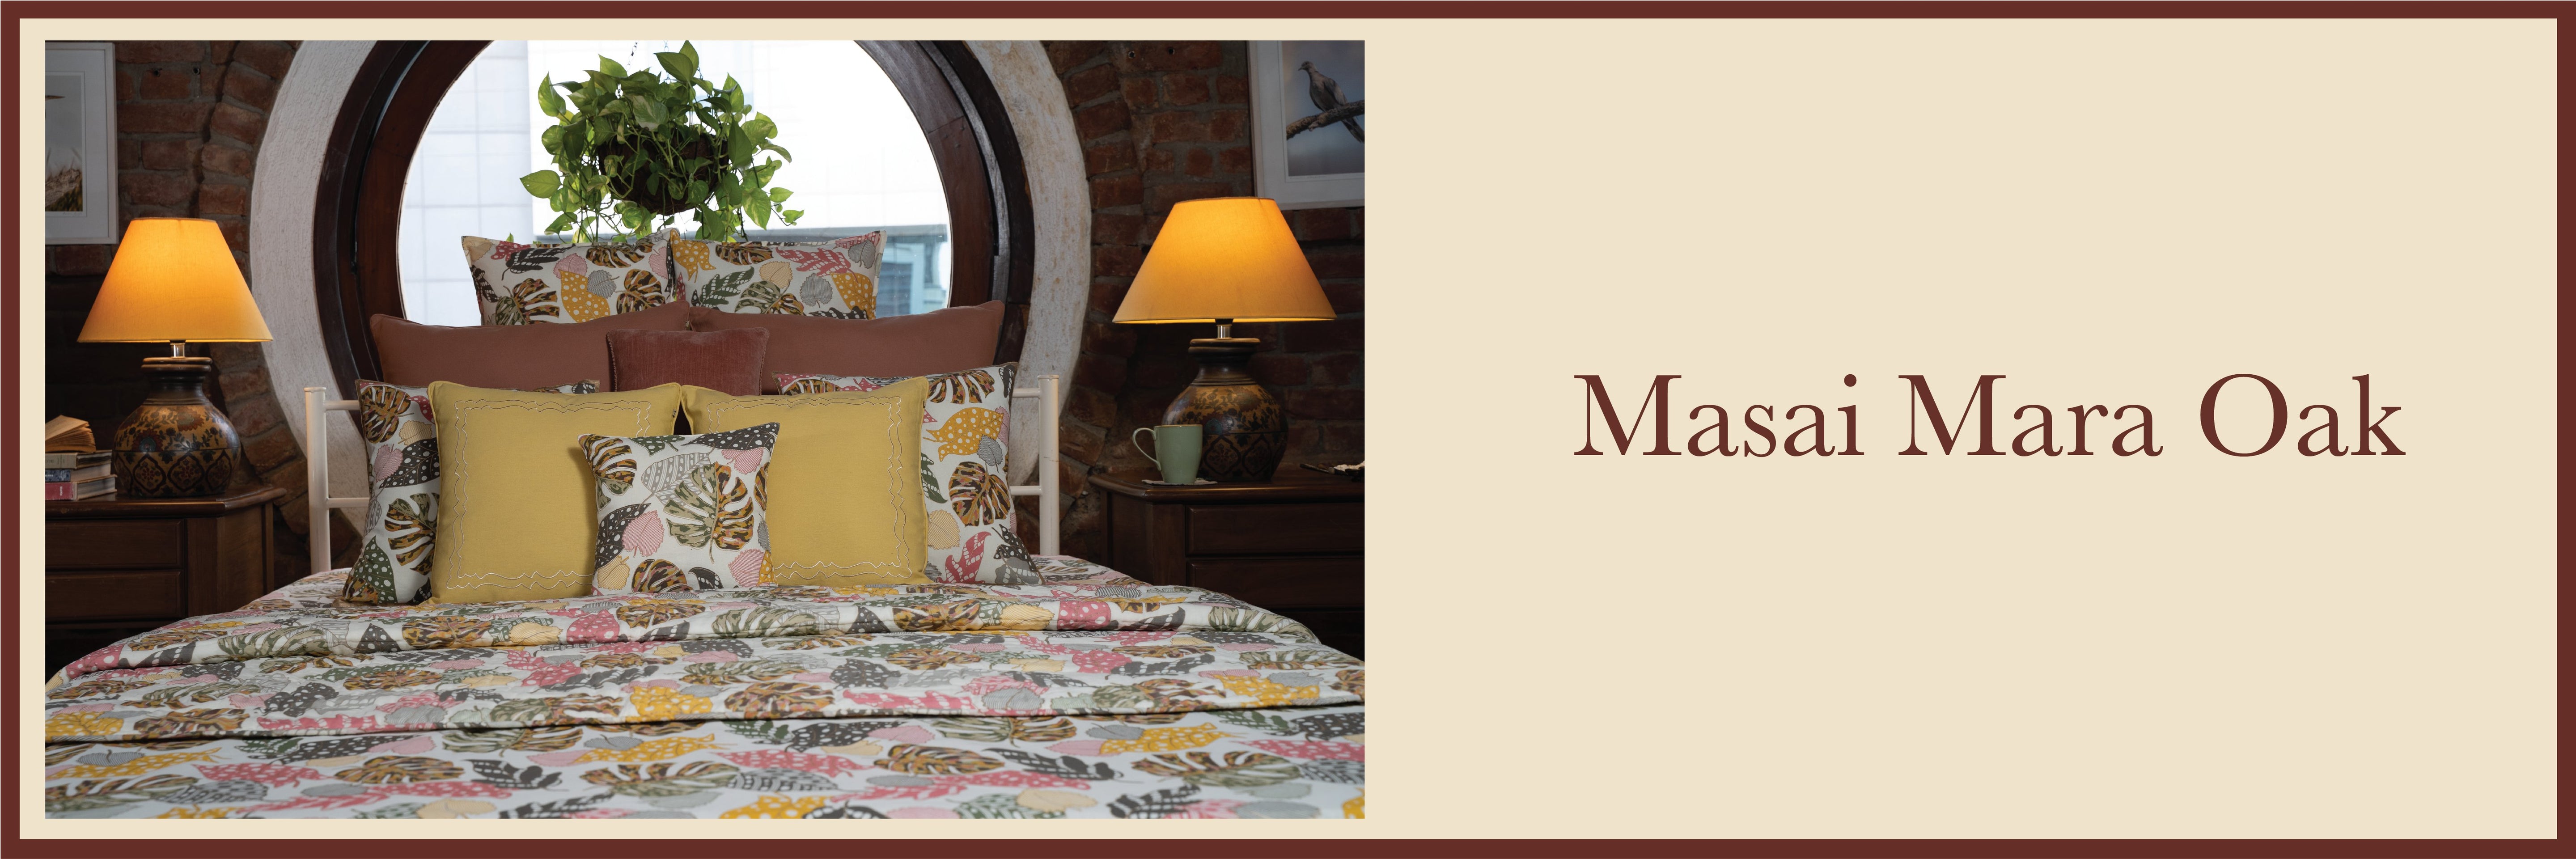 Masai Mara Oak - Bedroom Collection